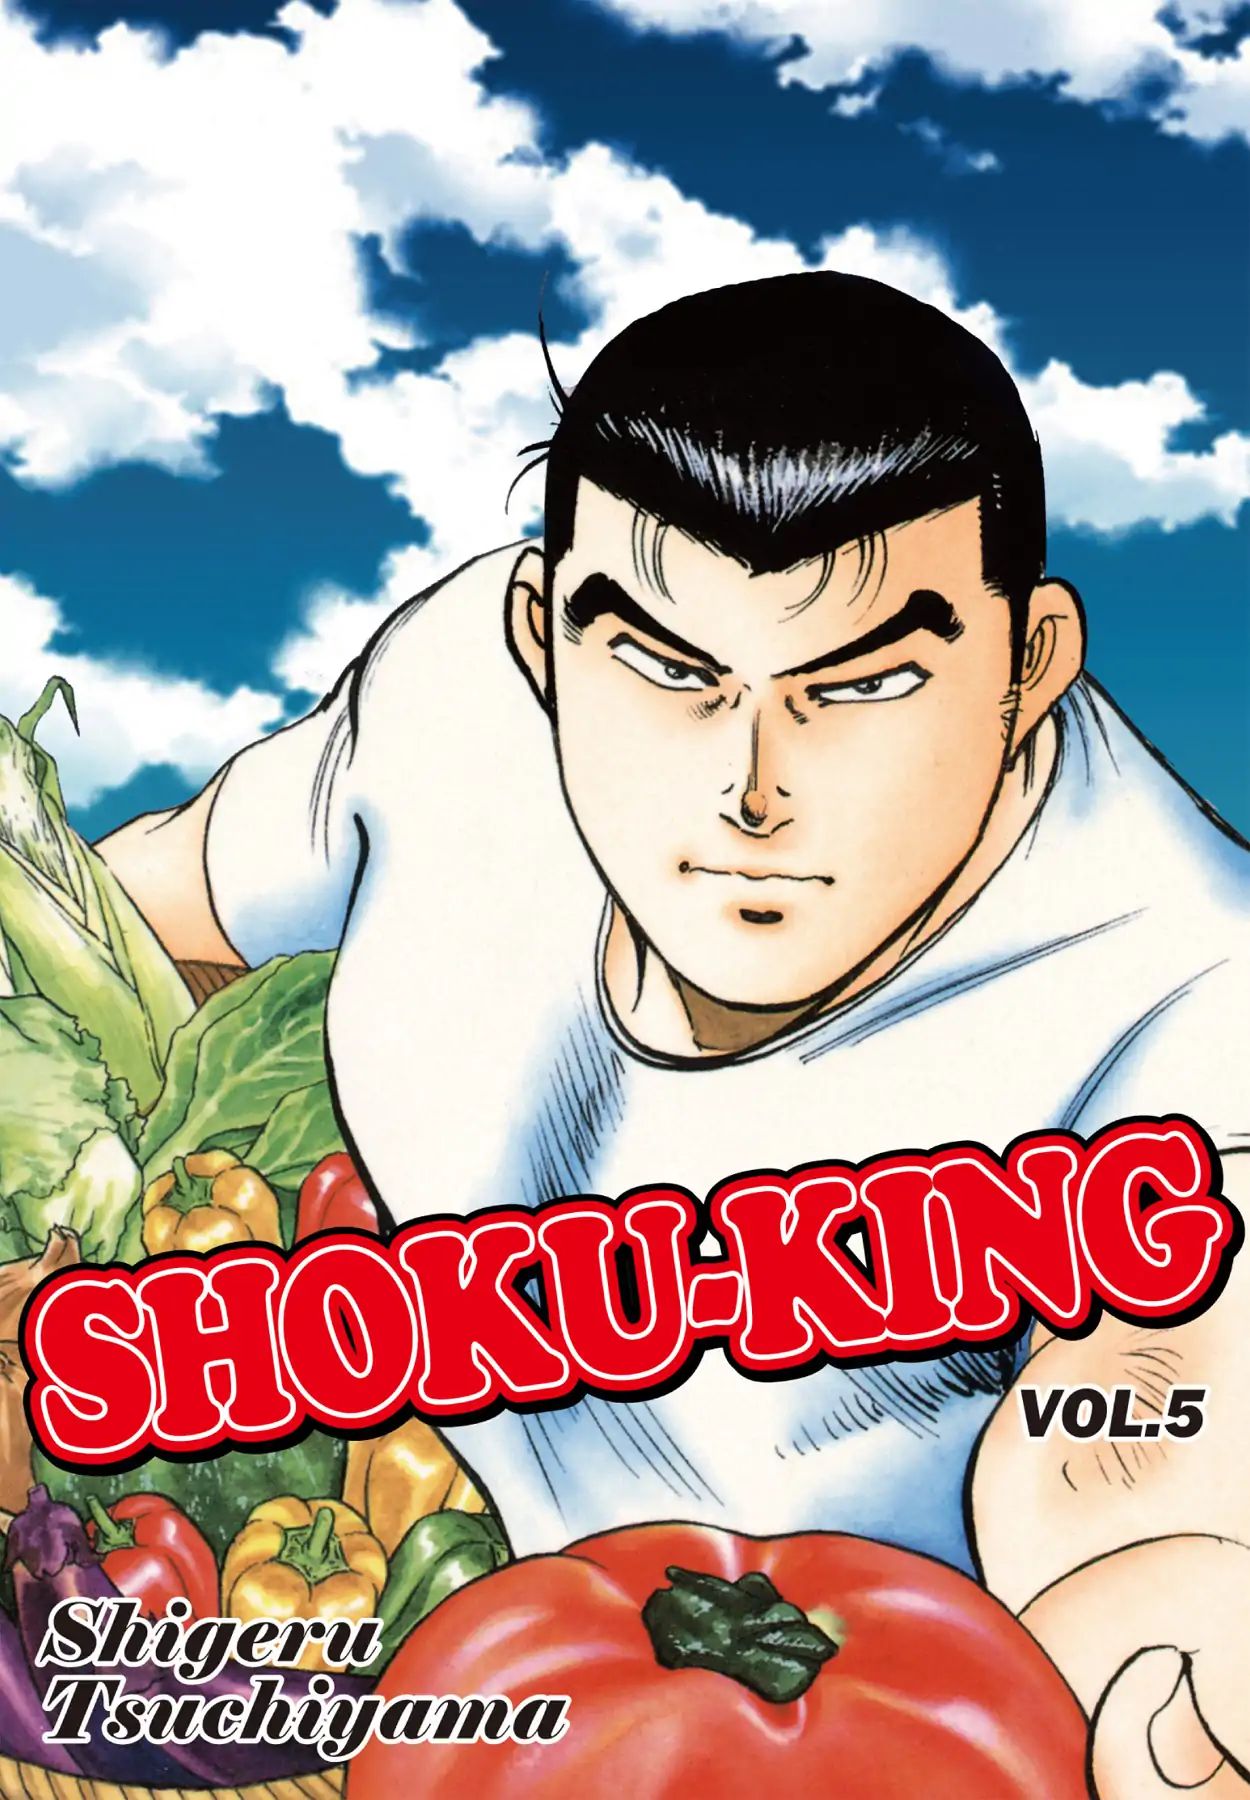 Shoku King VOL.5 CHAPTER 35: THE NEW HAMBURG STEAK